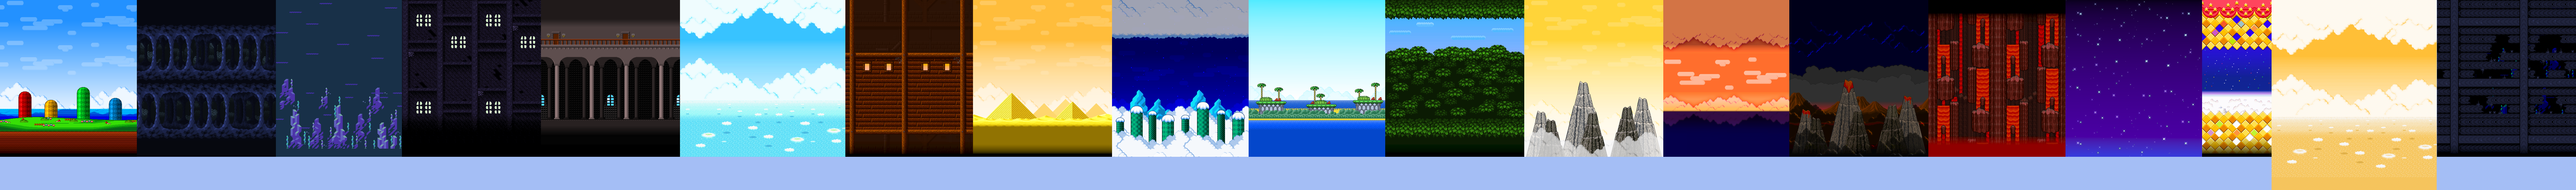 Super Mario UniMaker - Level Backgrounds